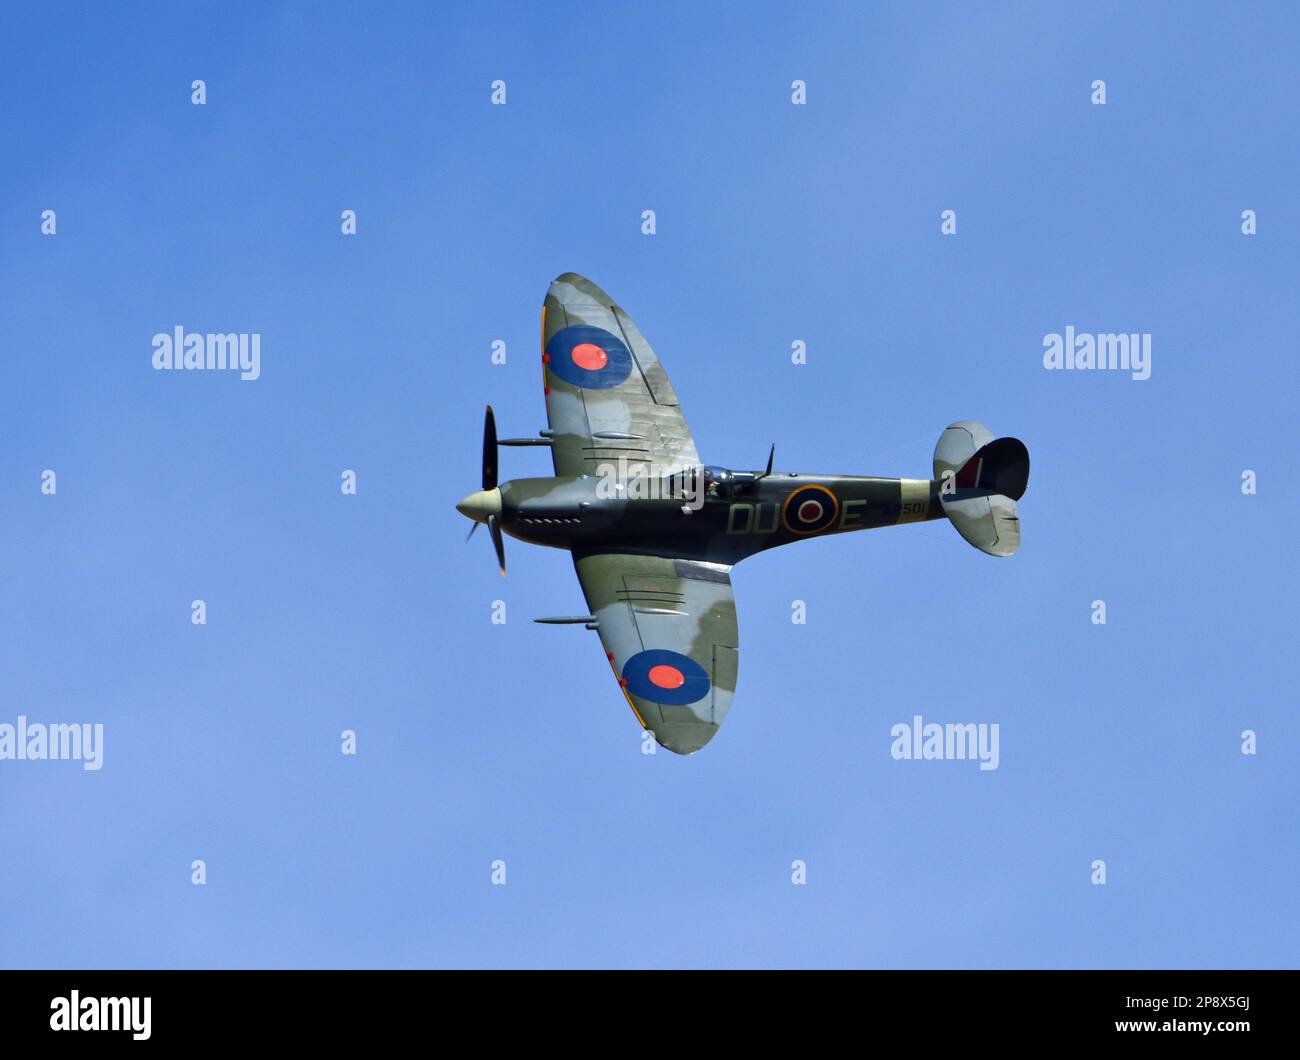 ICKWELL, BEDFORDSHIRE, ENGLAND - 07. AUGUST 2022: Oldtimer Supermarine Spitfire MK VC AR501 G-AWII im Flug. Stockfoto